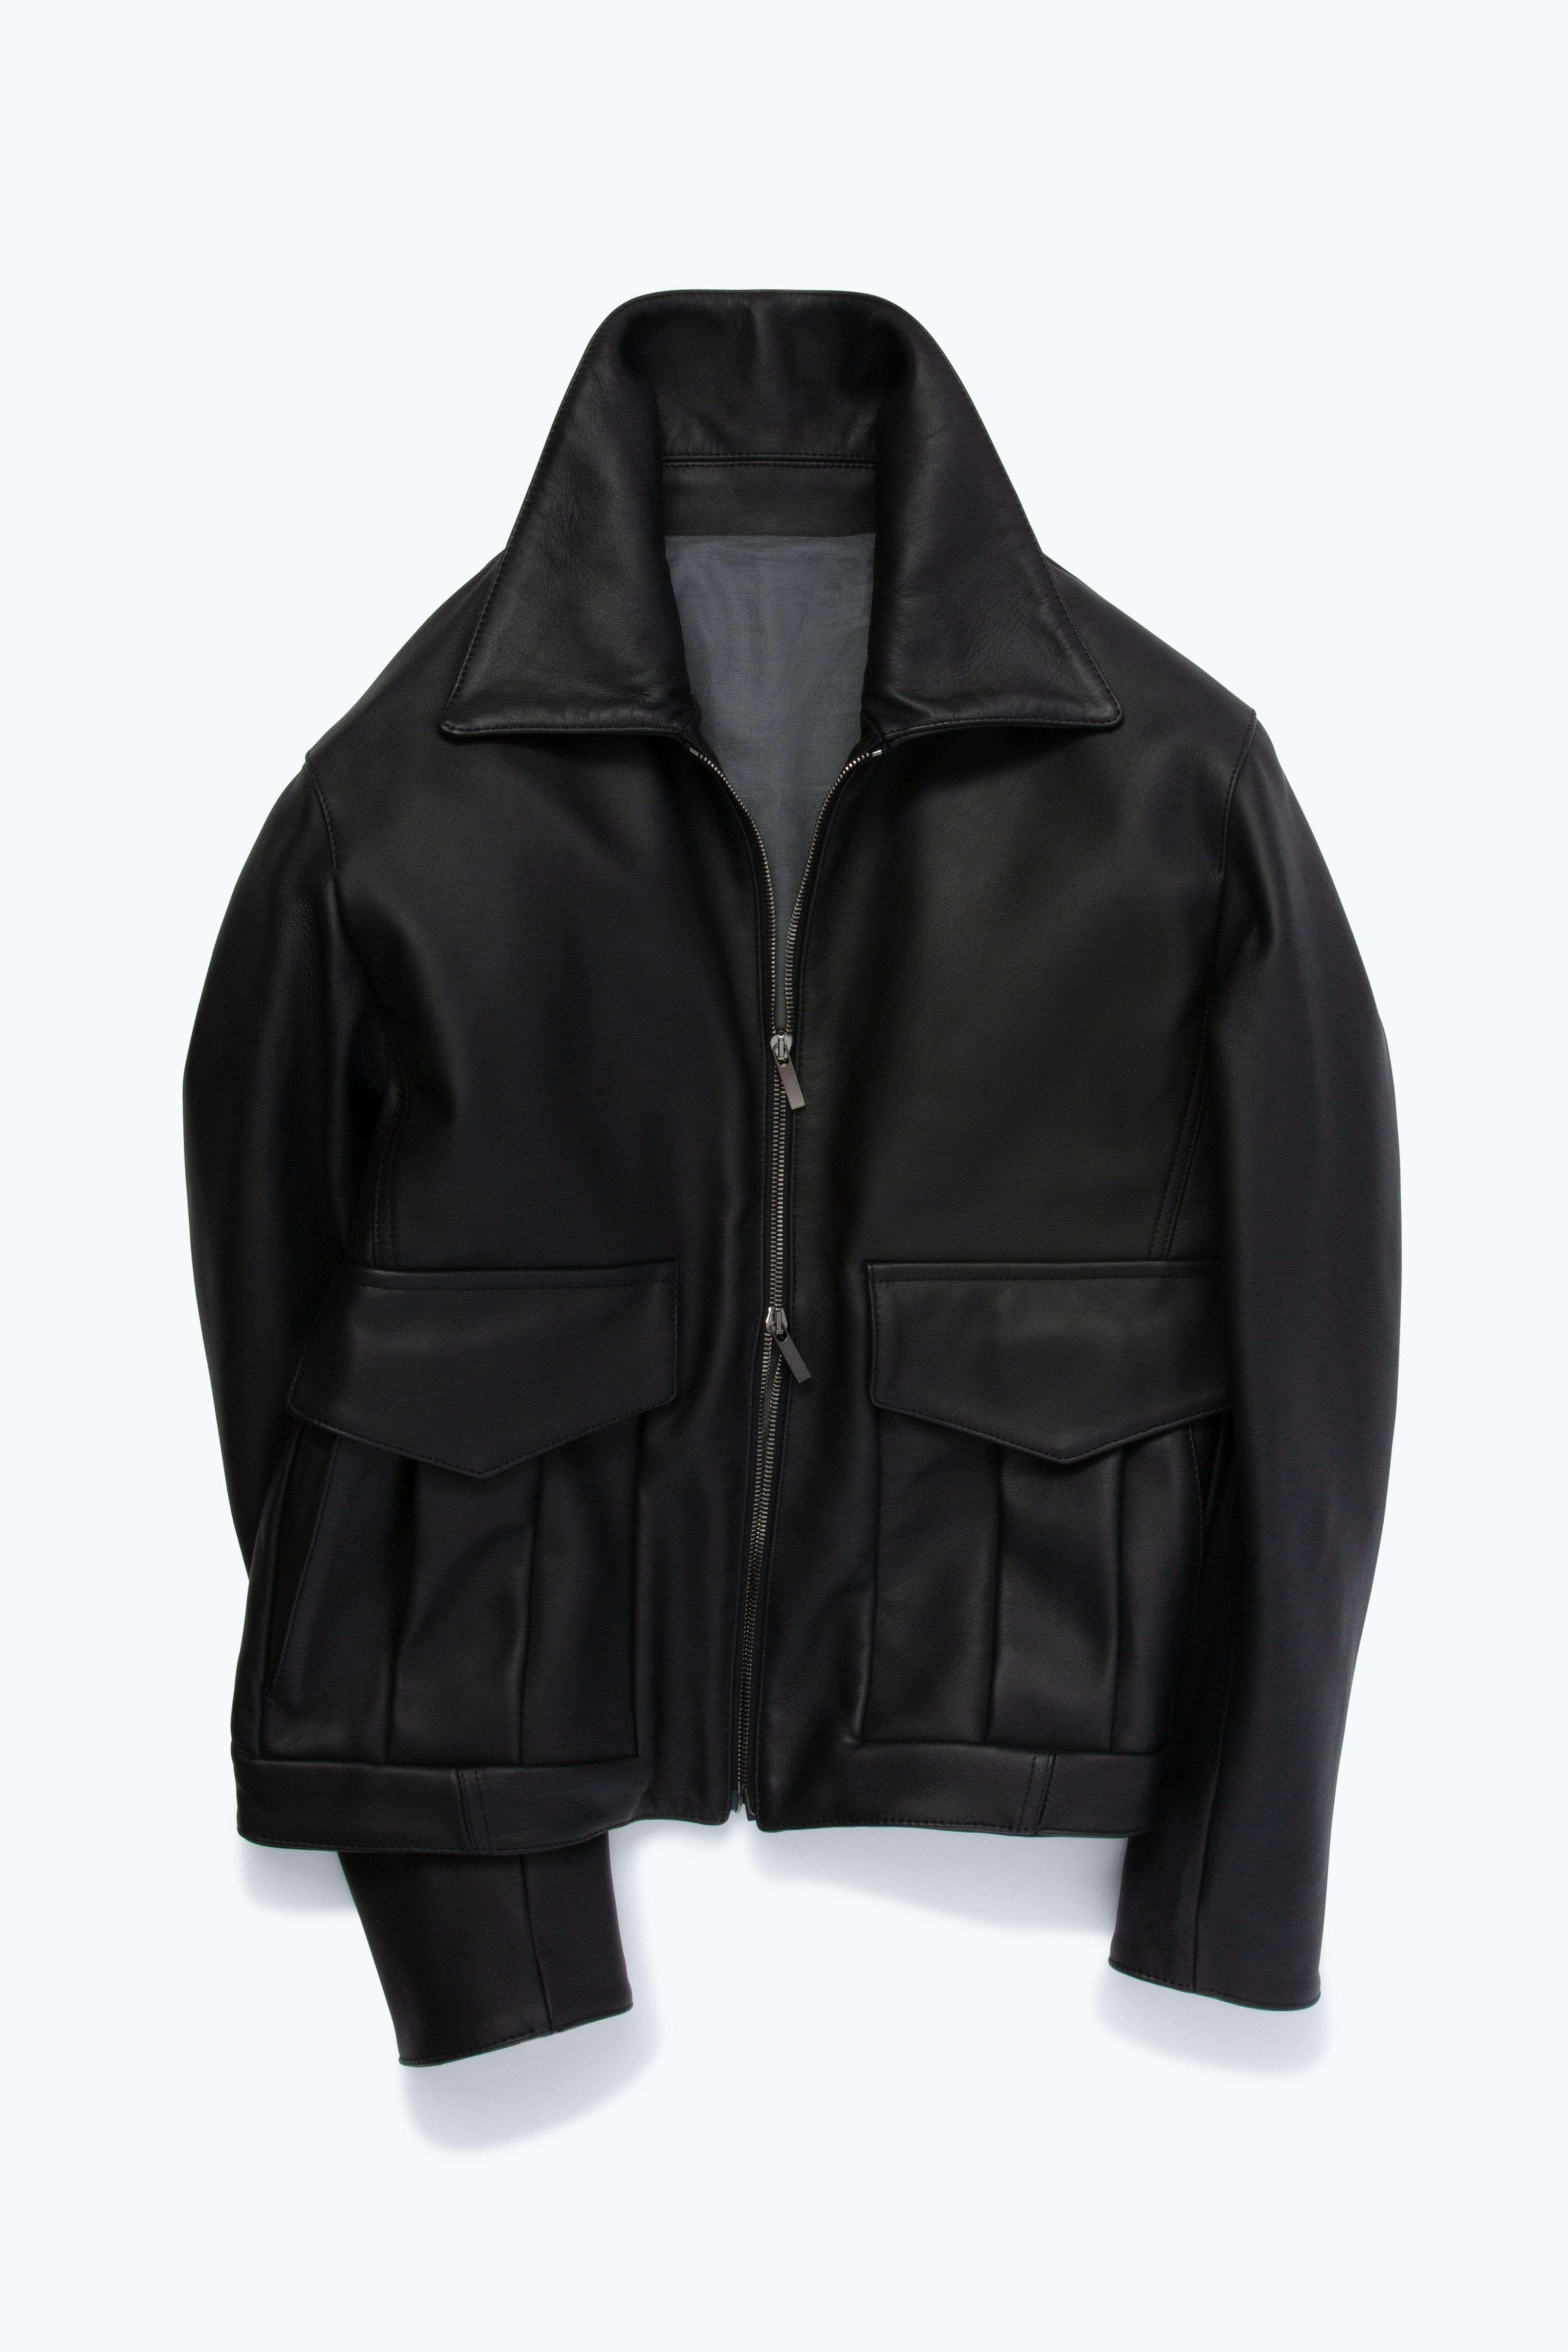 MTO - Flight Jacket (Black Plong  Leather)